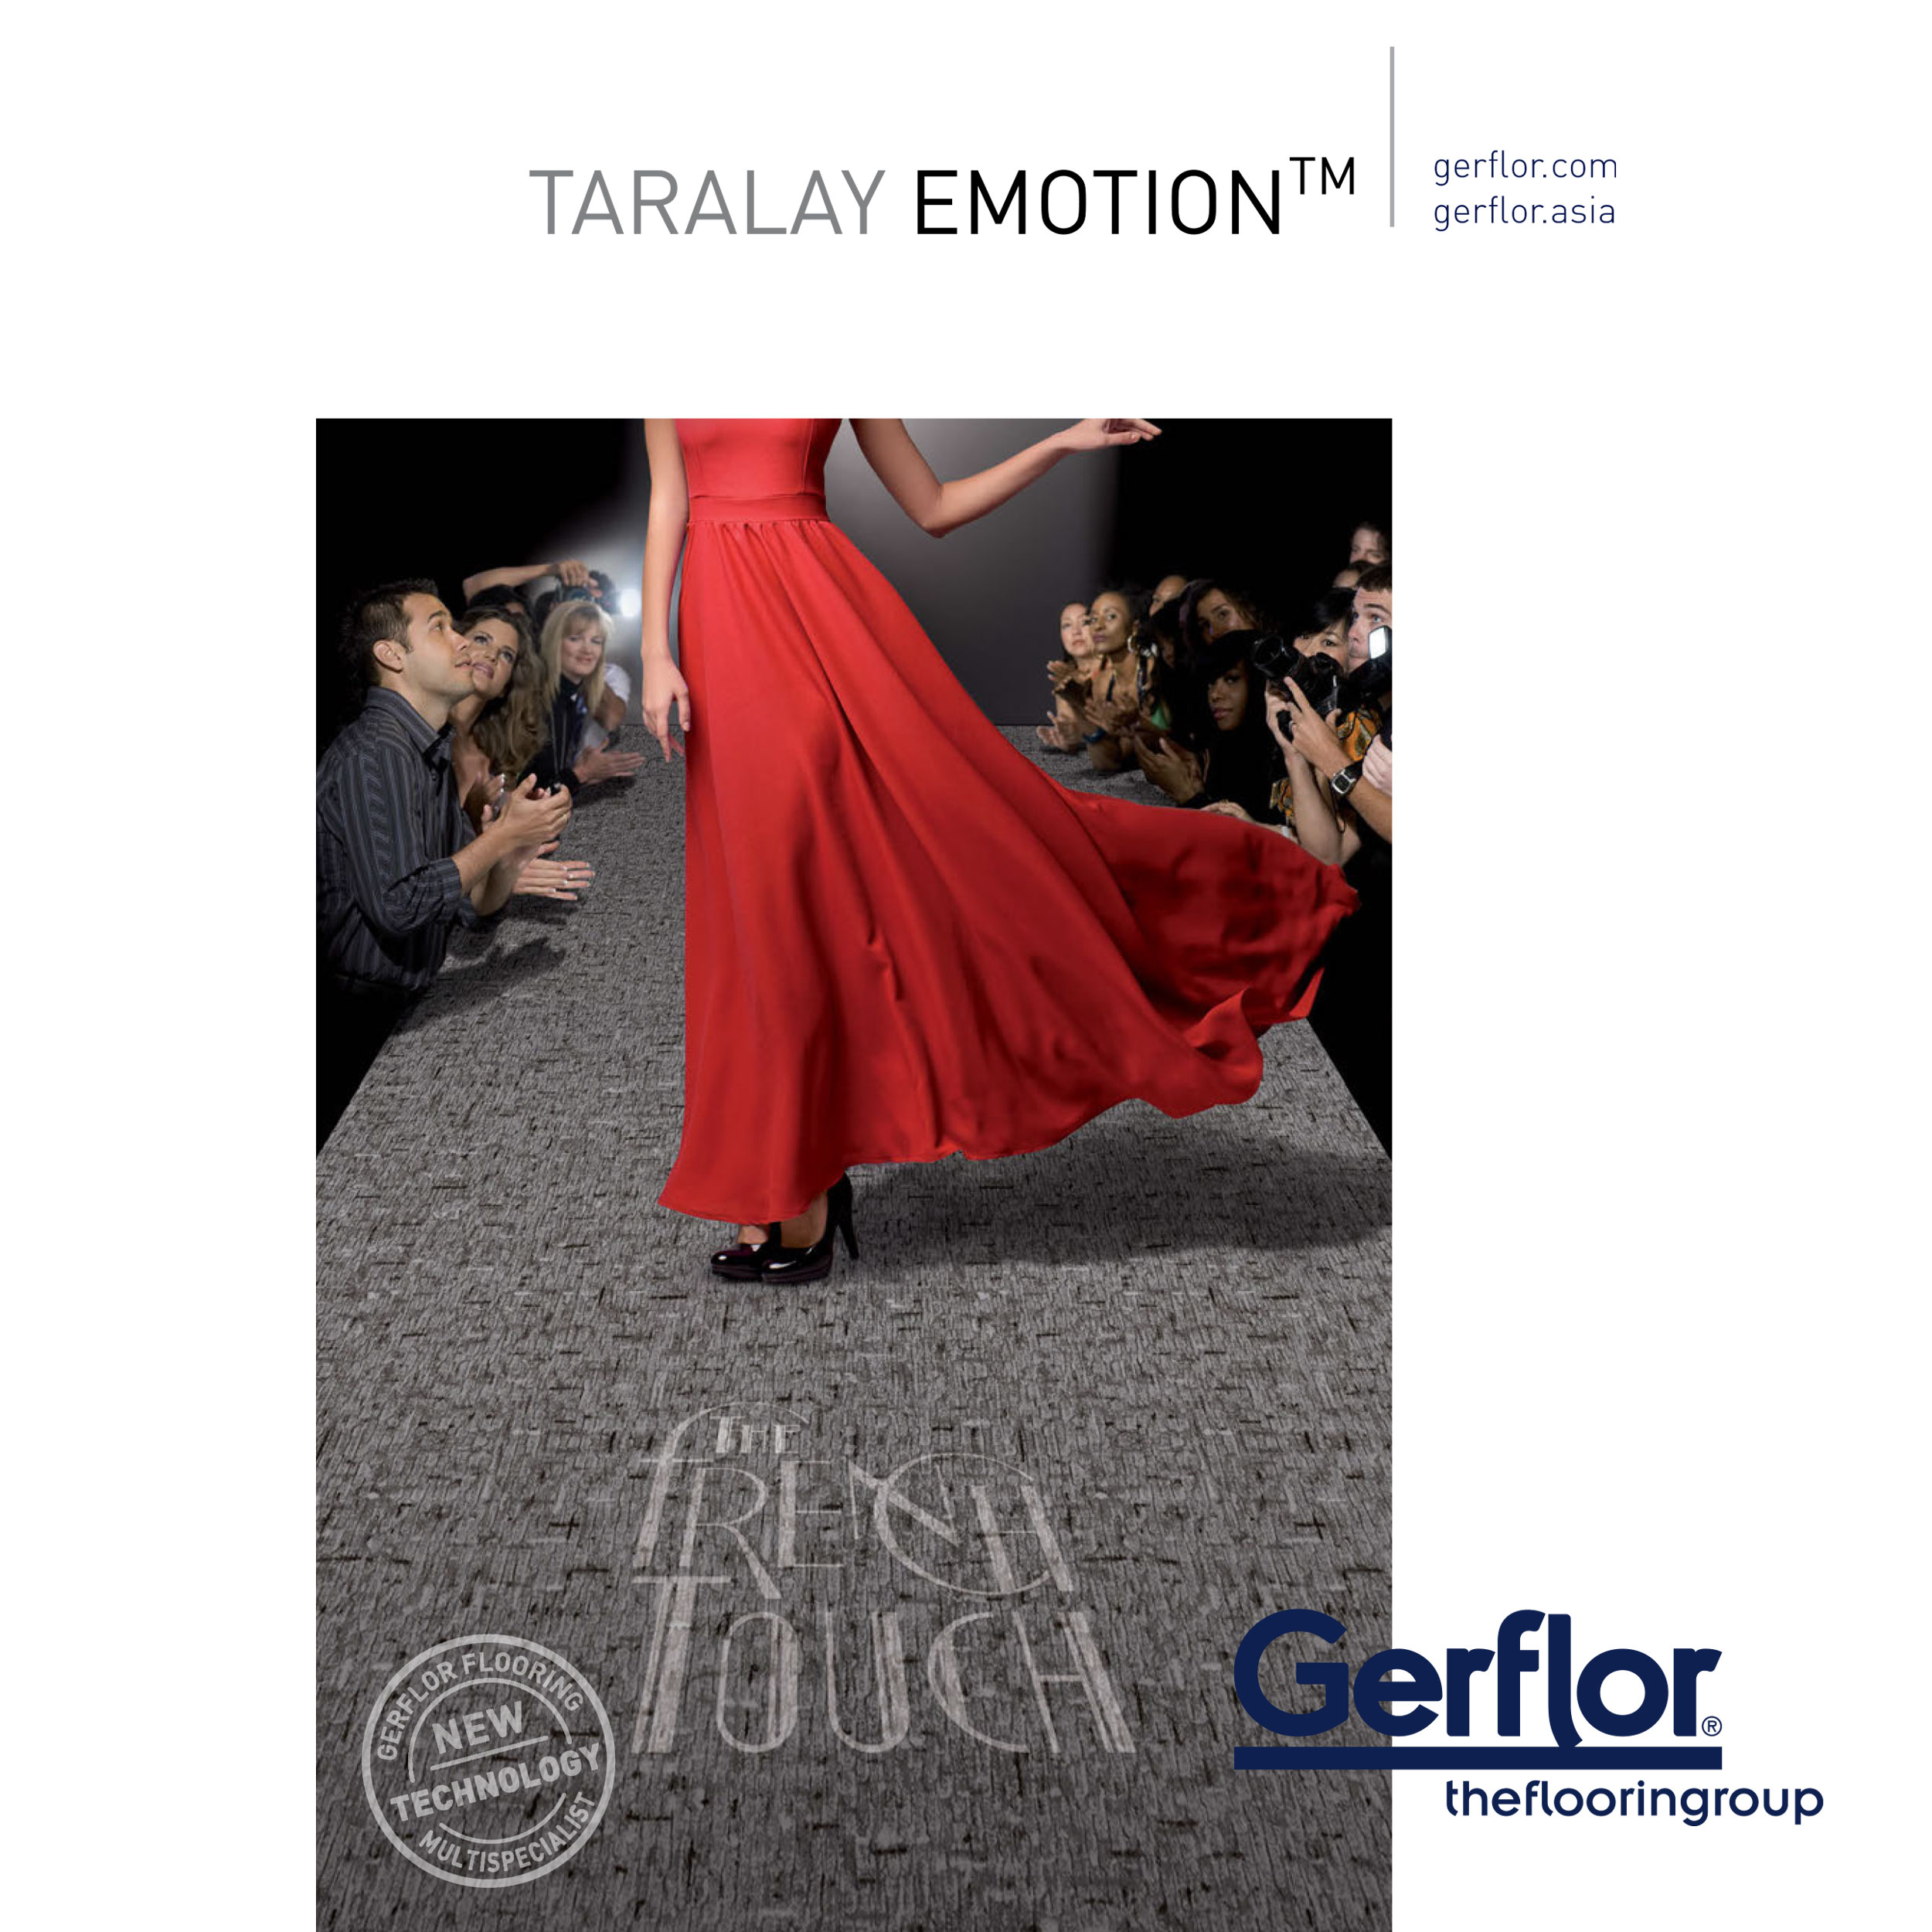 Taralay emotion